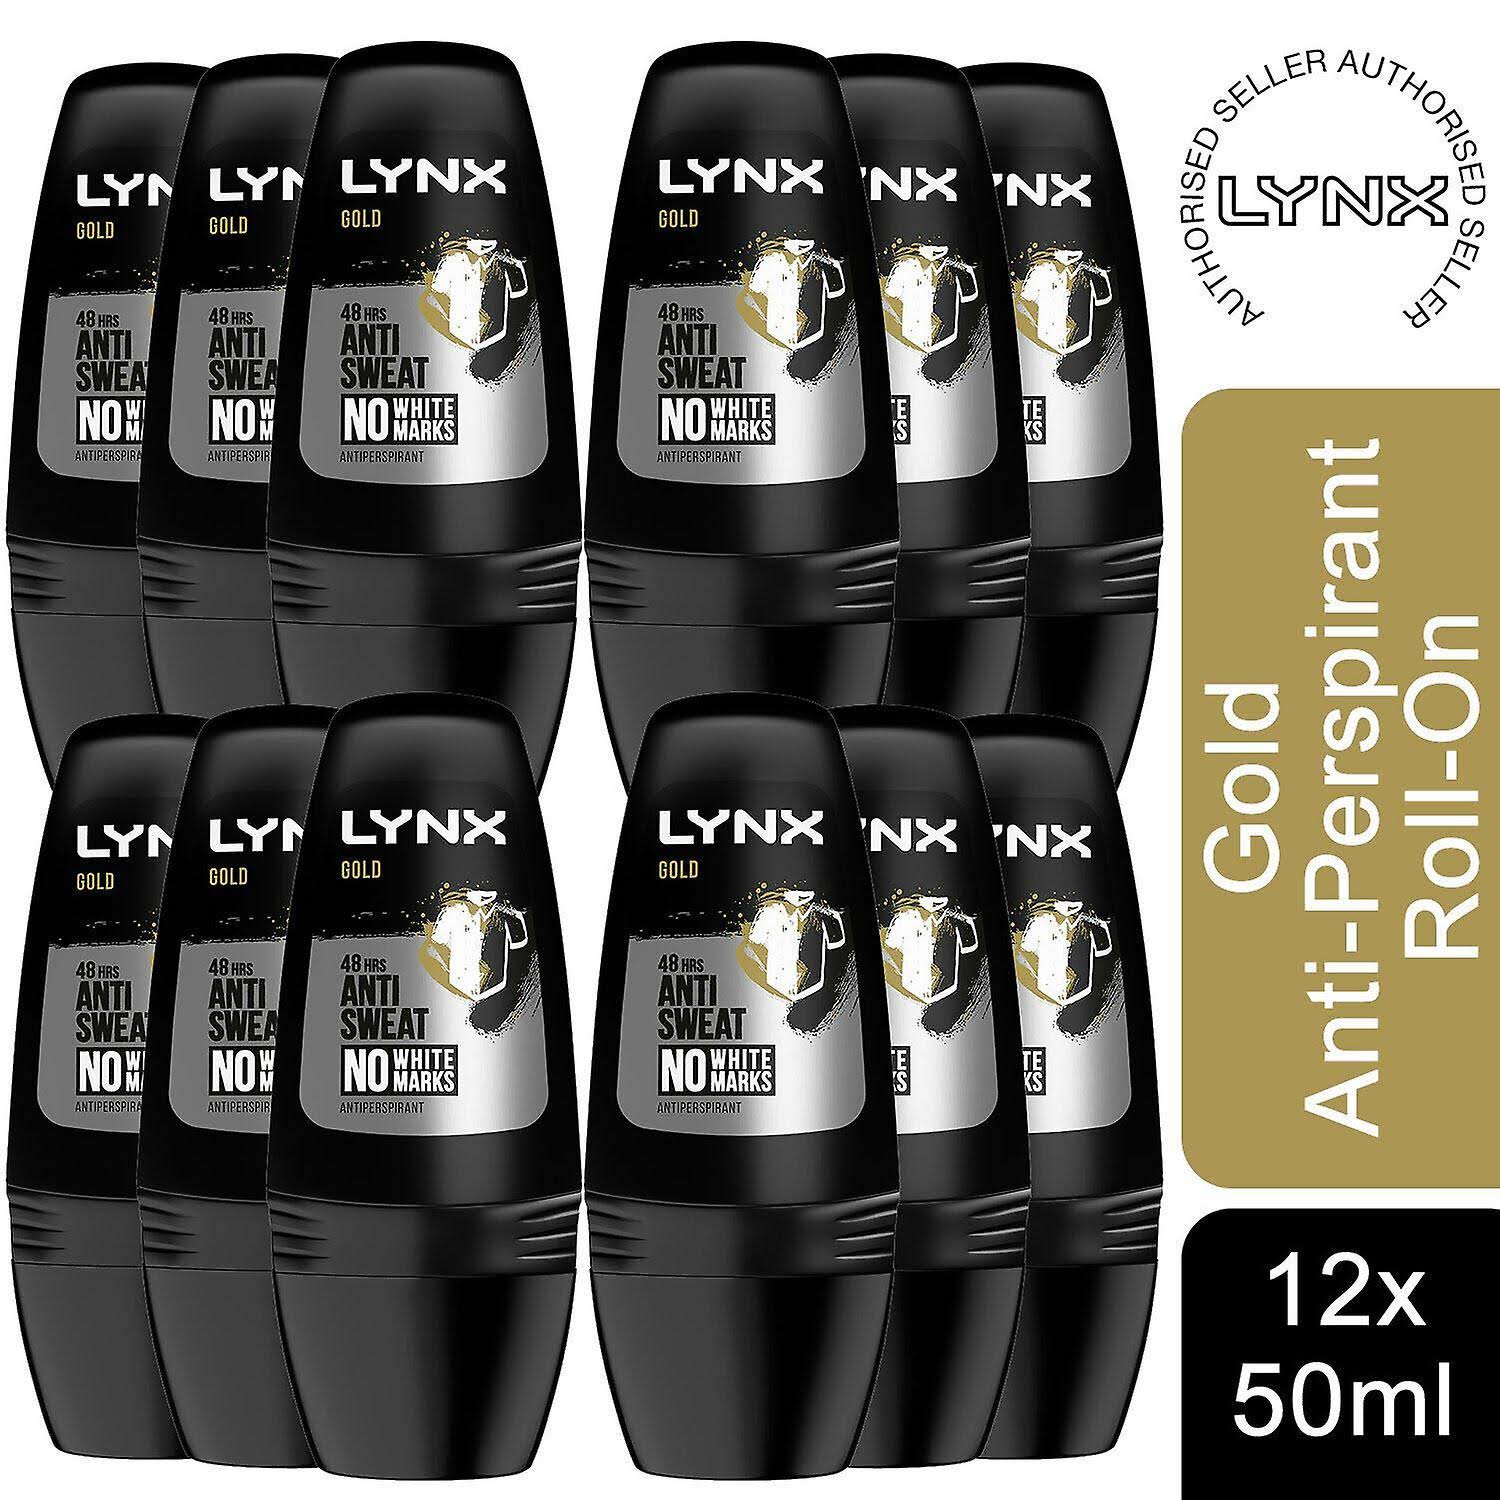 Lynx Gold Anti-Perspirant Deodorant Roll-On 50ml